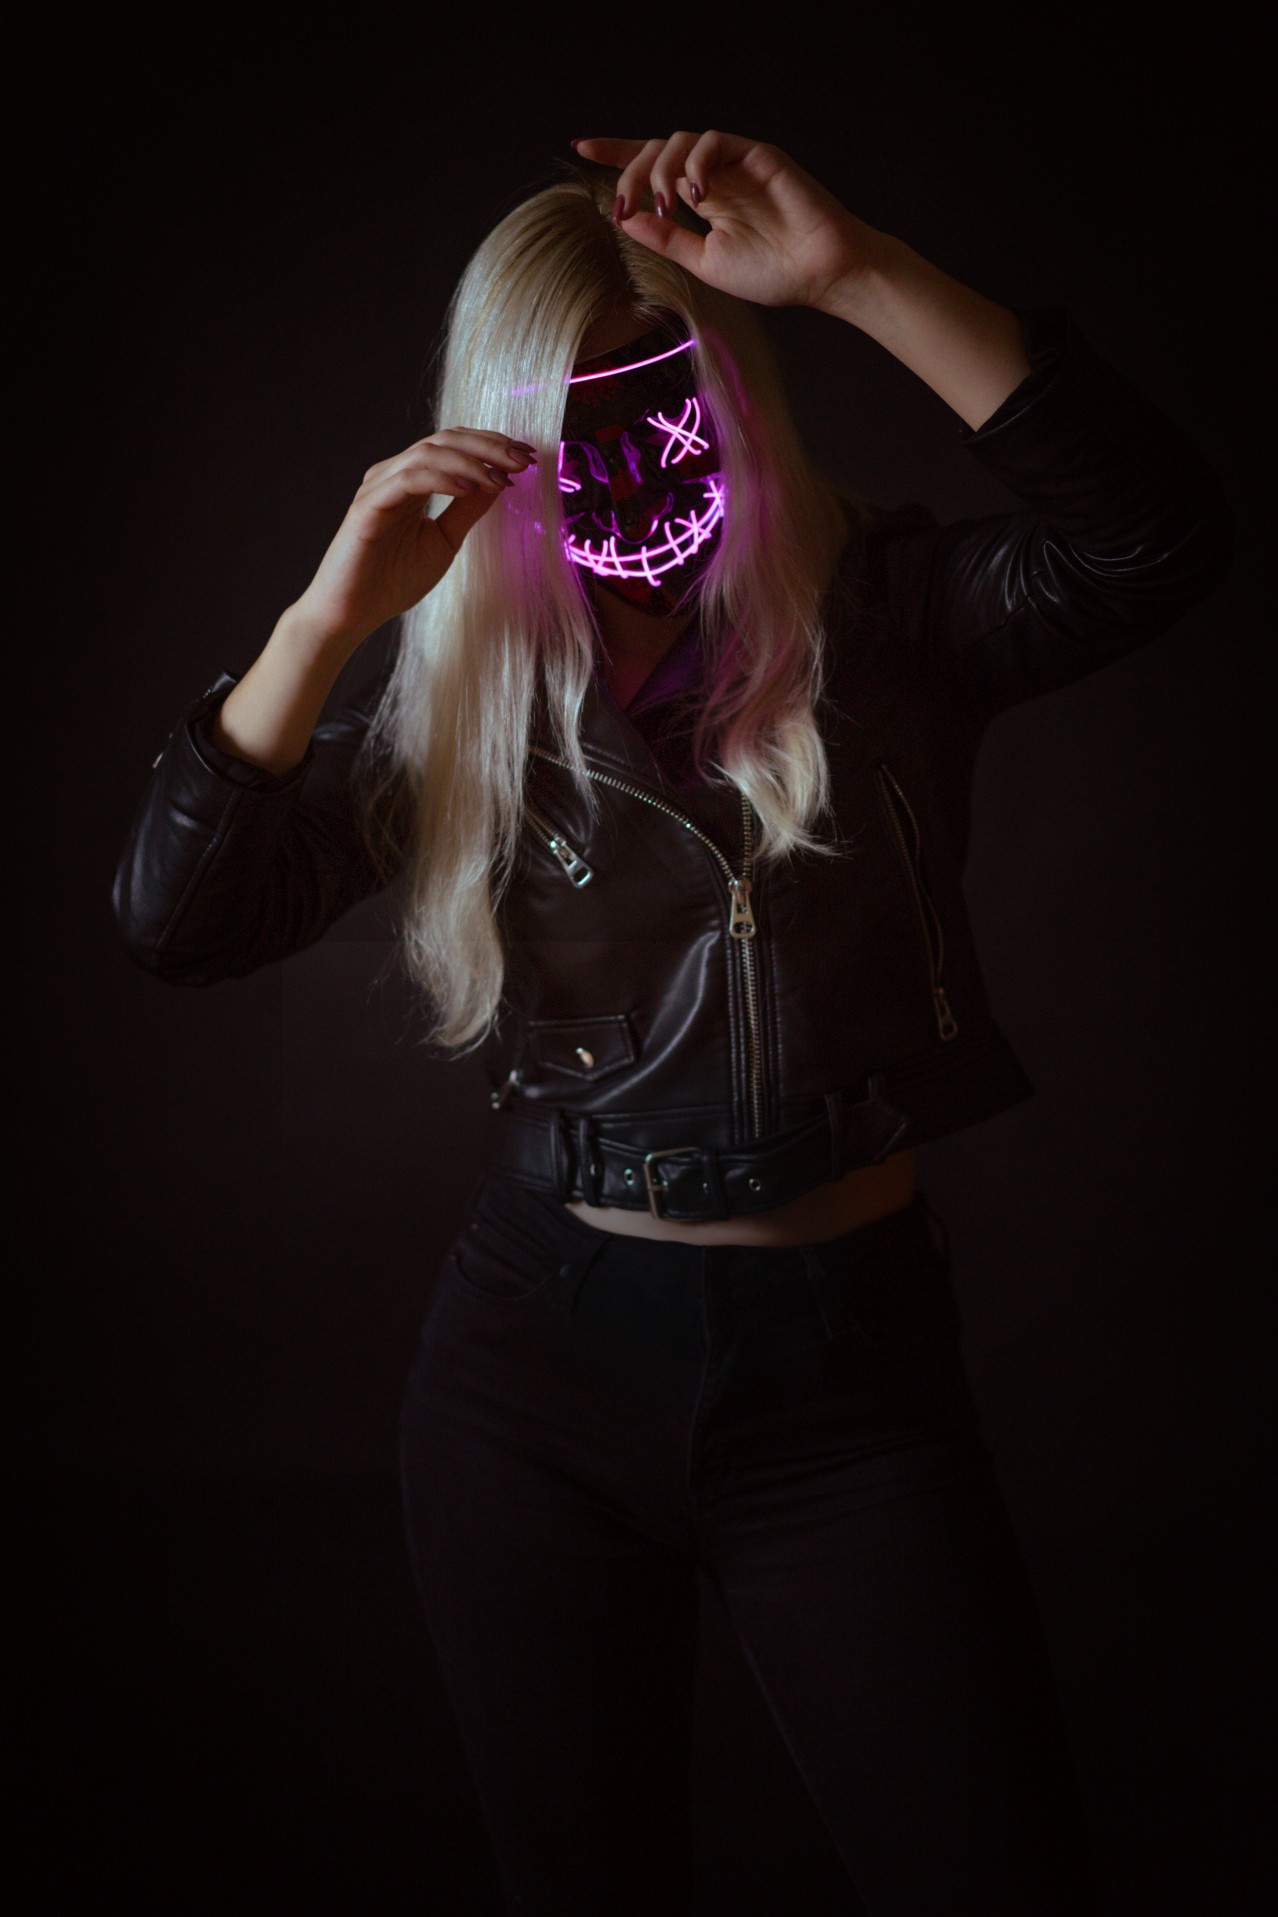 Girl in neon mask posing on black background